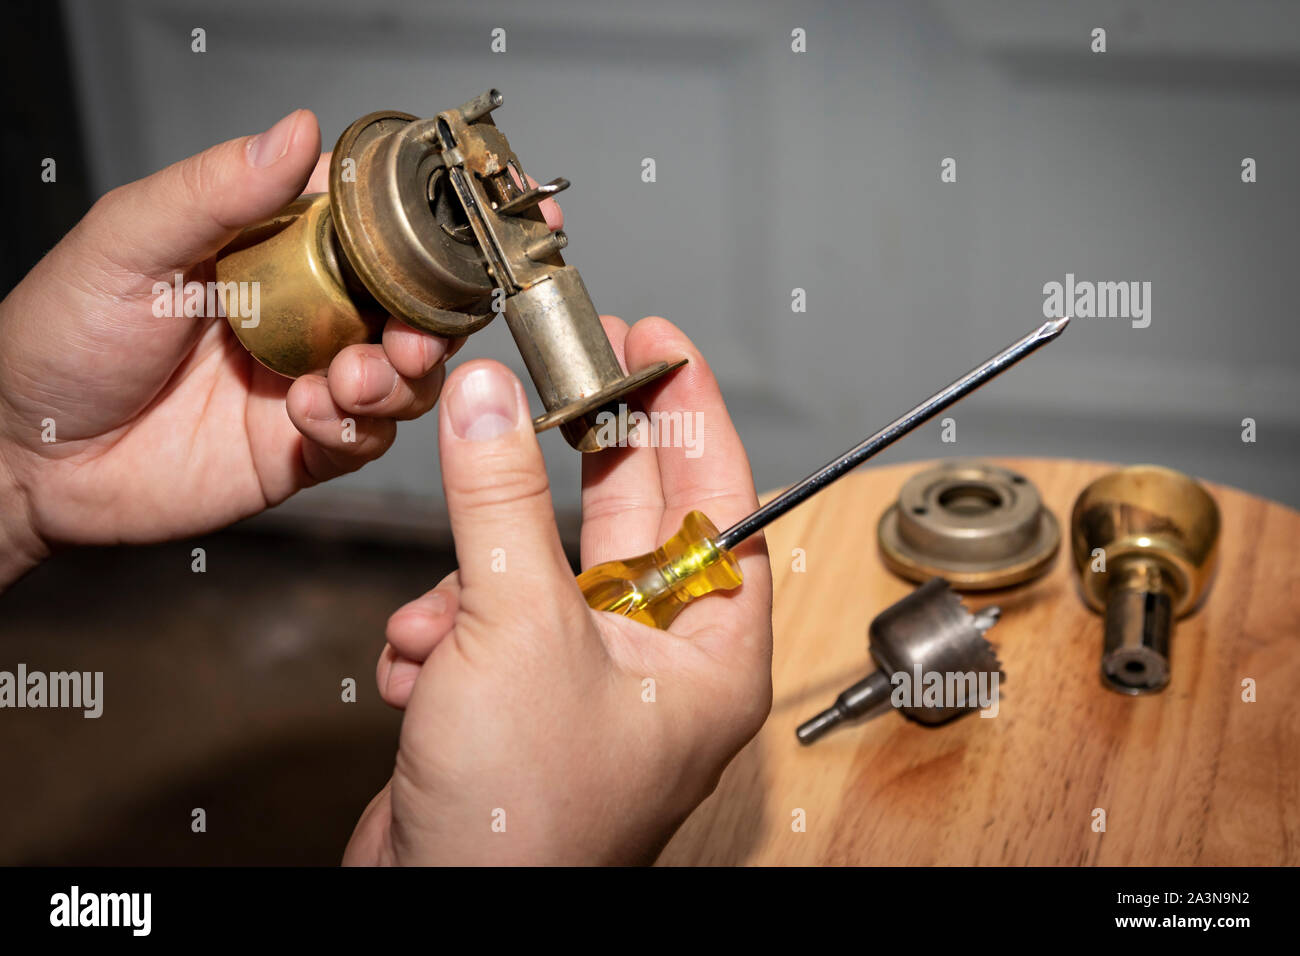 Disassembled doorknob undergoing repair in man's hands Stock Photo